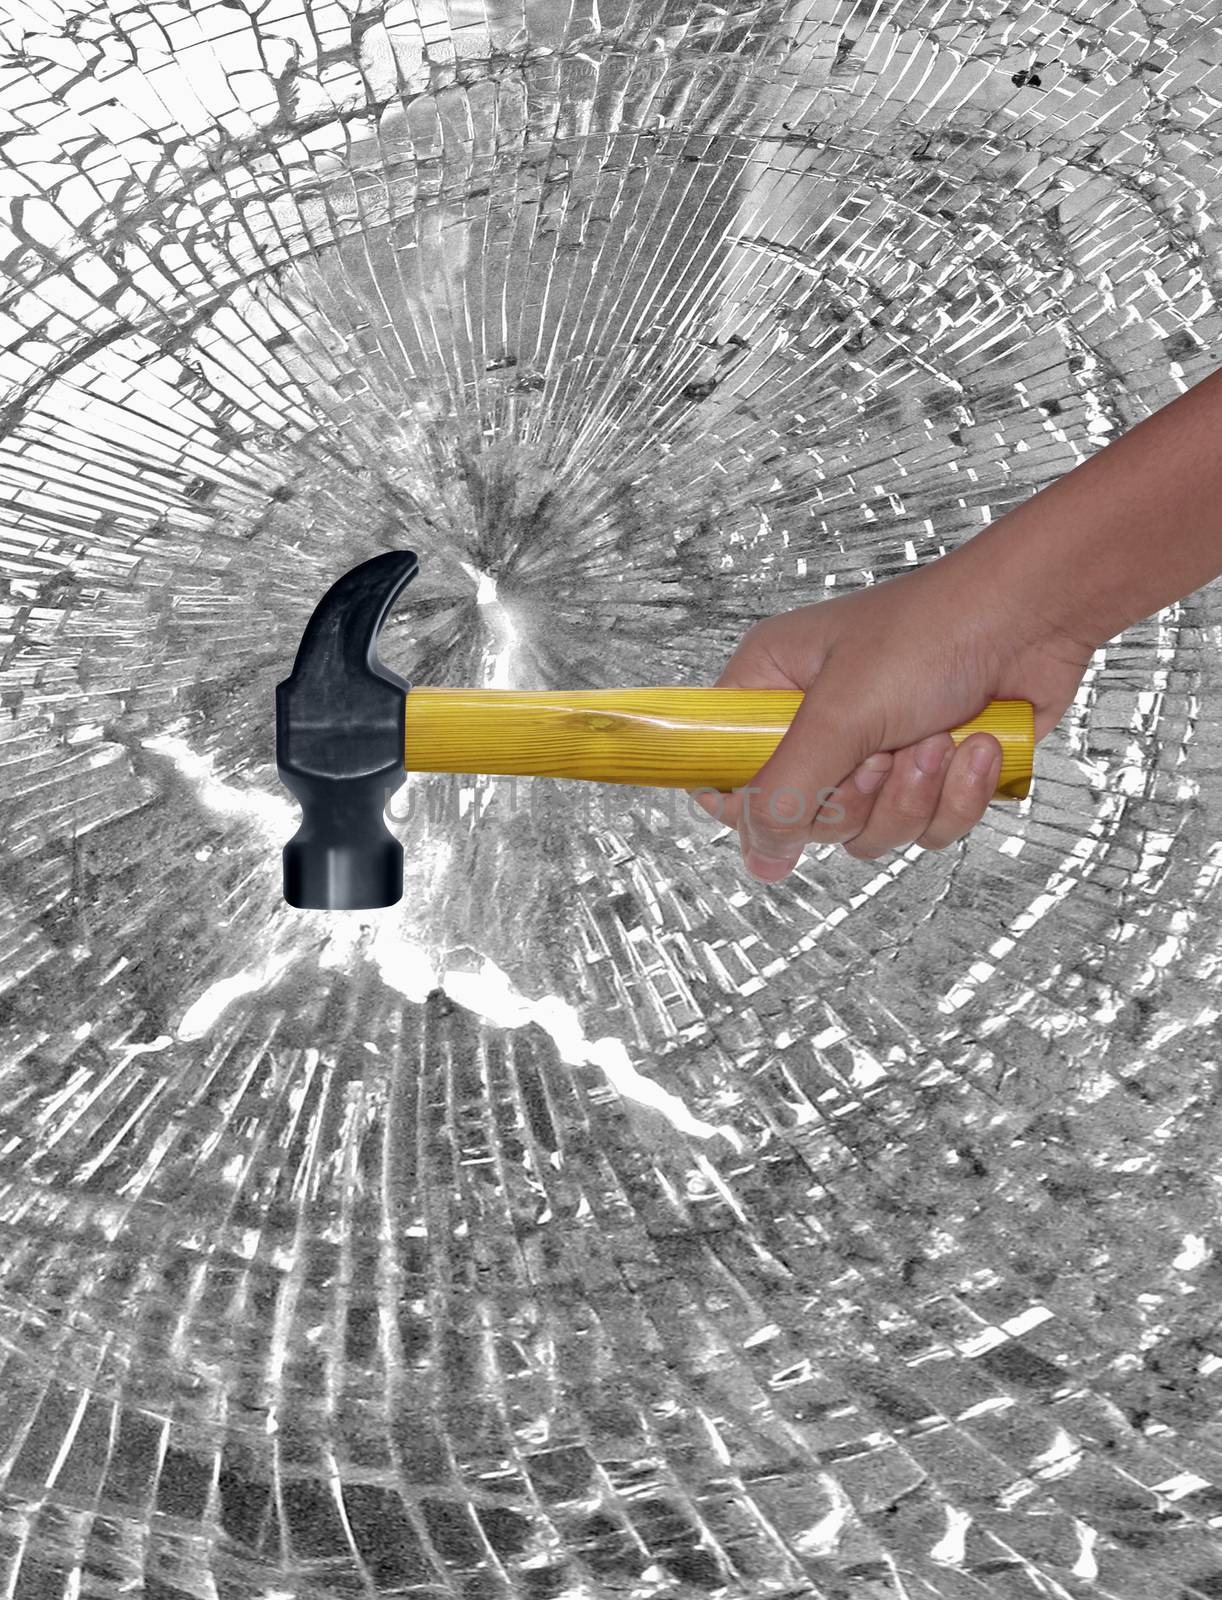 Hammer in Human Hand hitting Glass